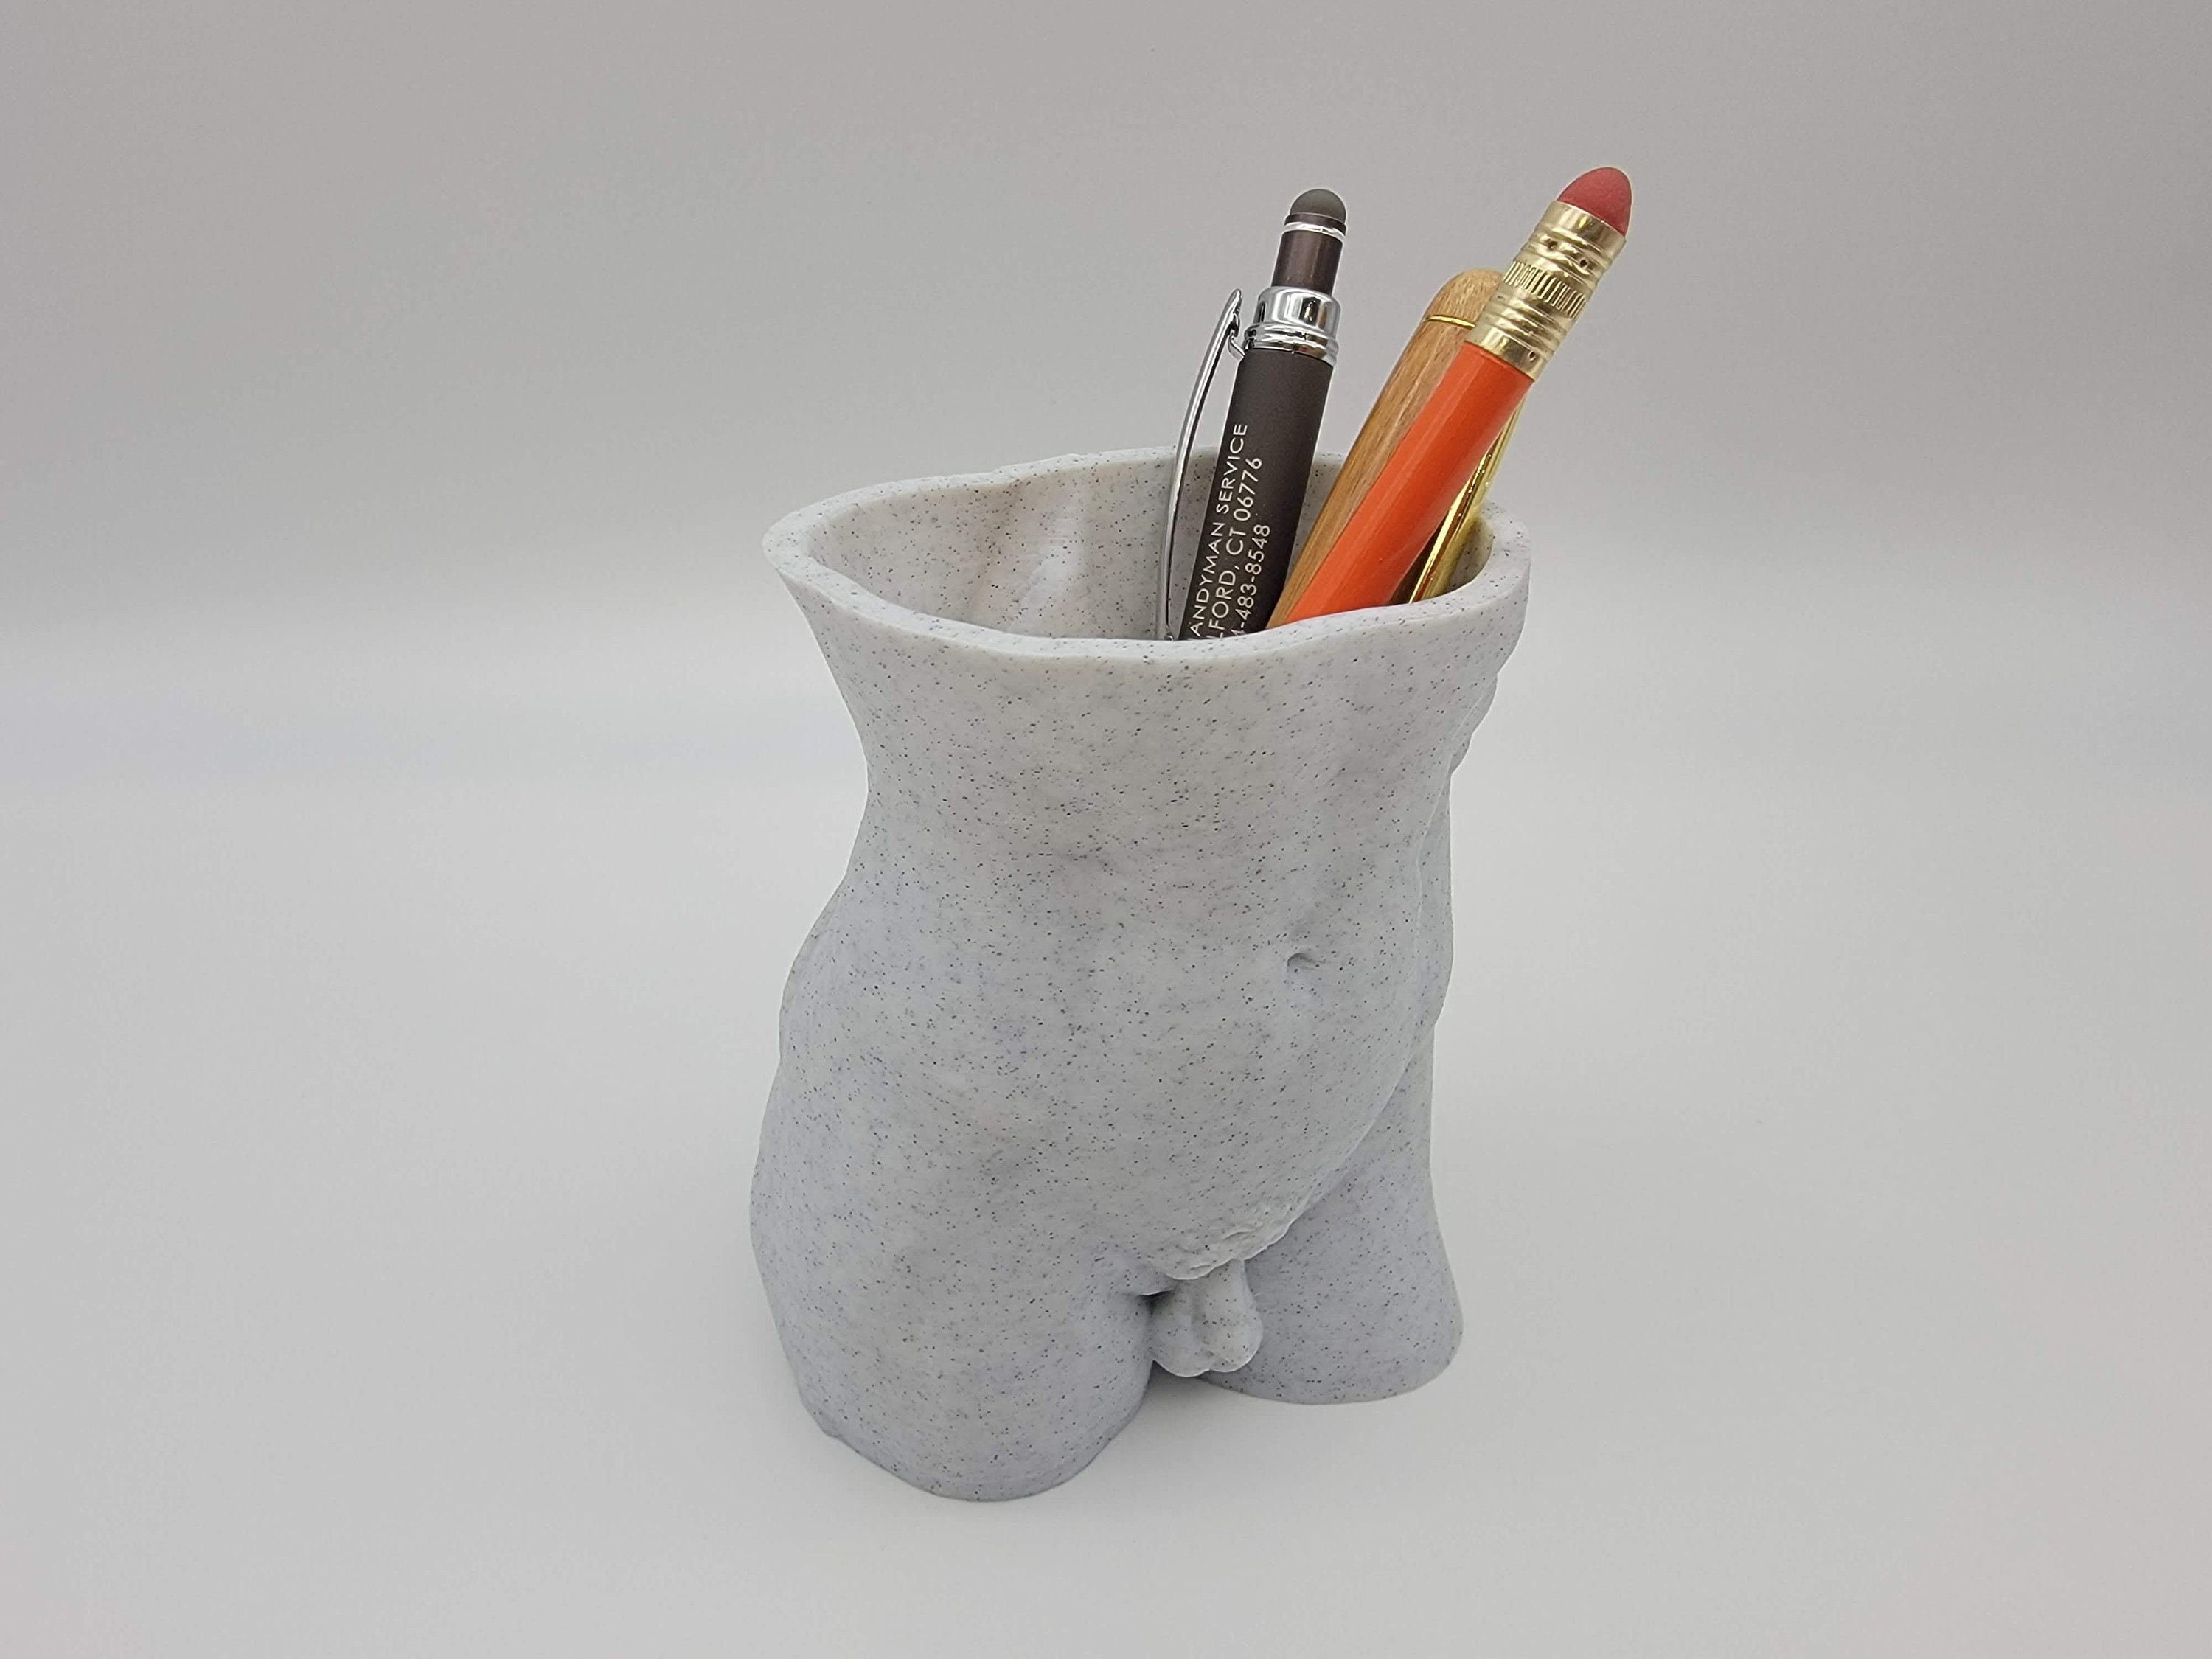 Minimalist Wooden Pencil Holder. Nordic Pen Cup for Desk